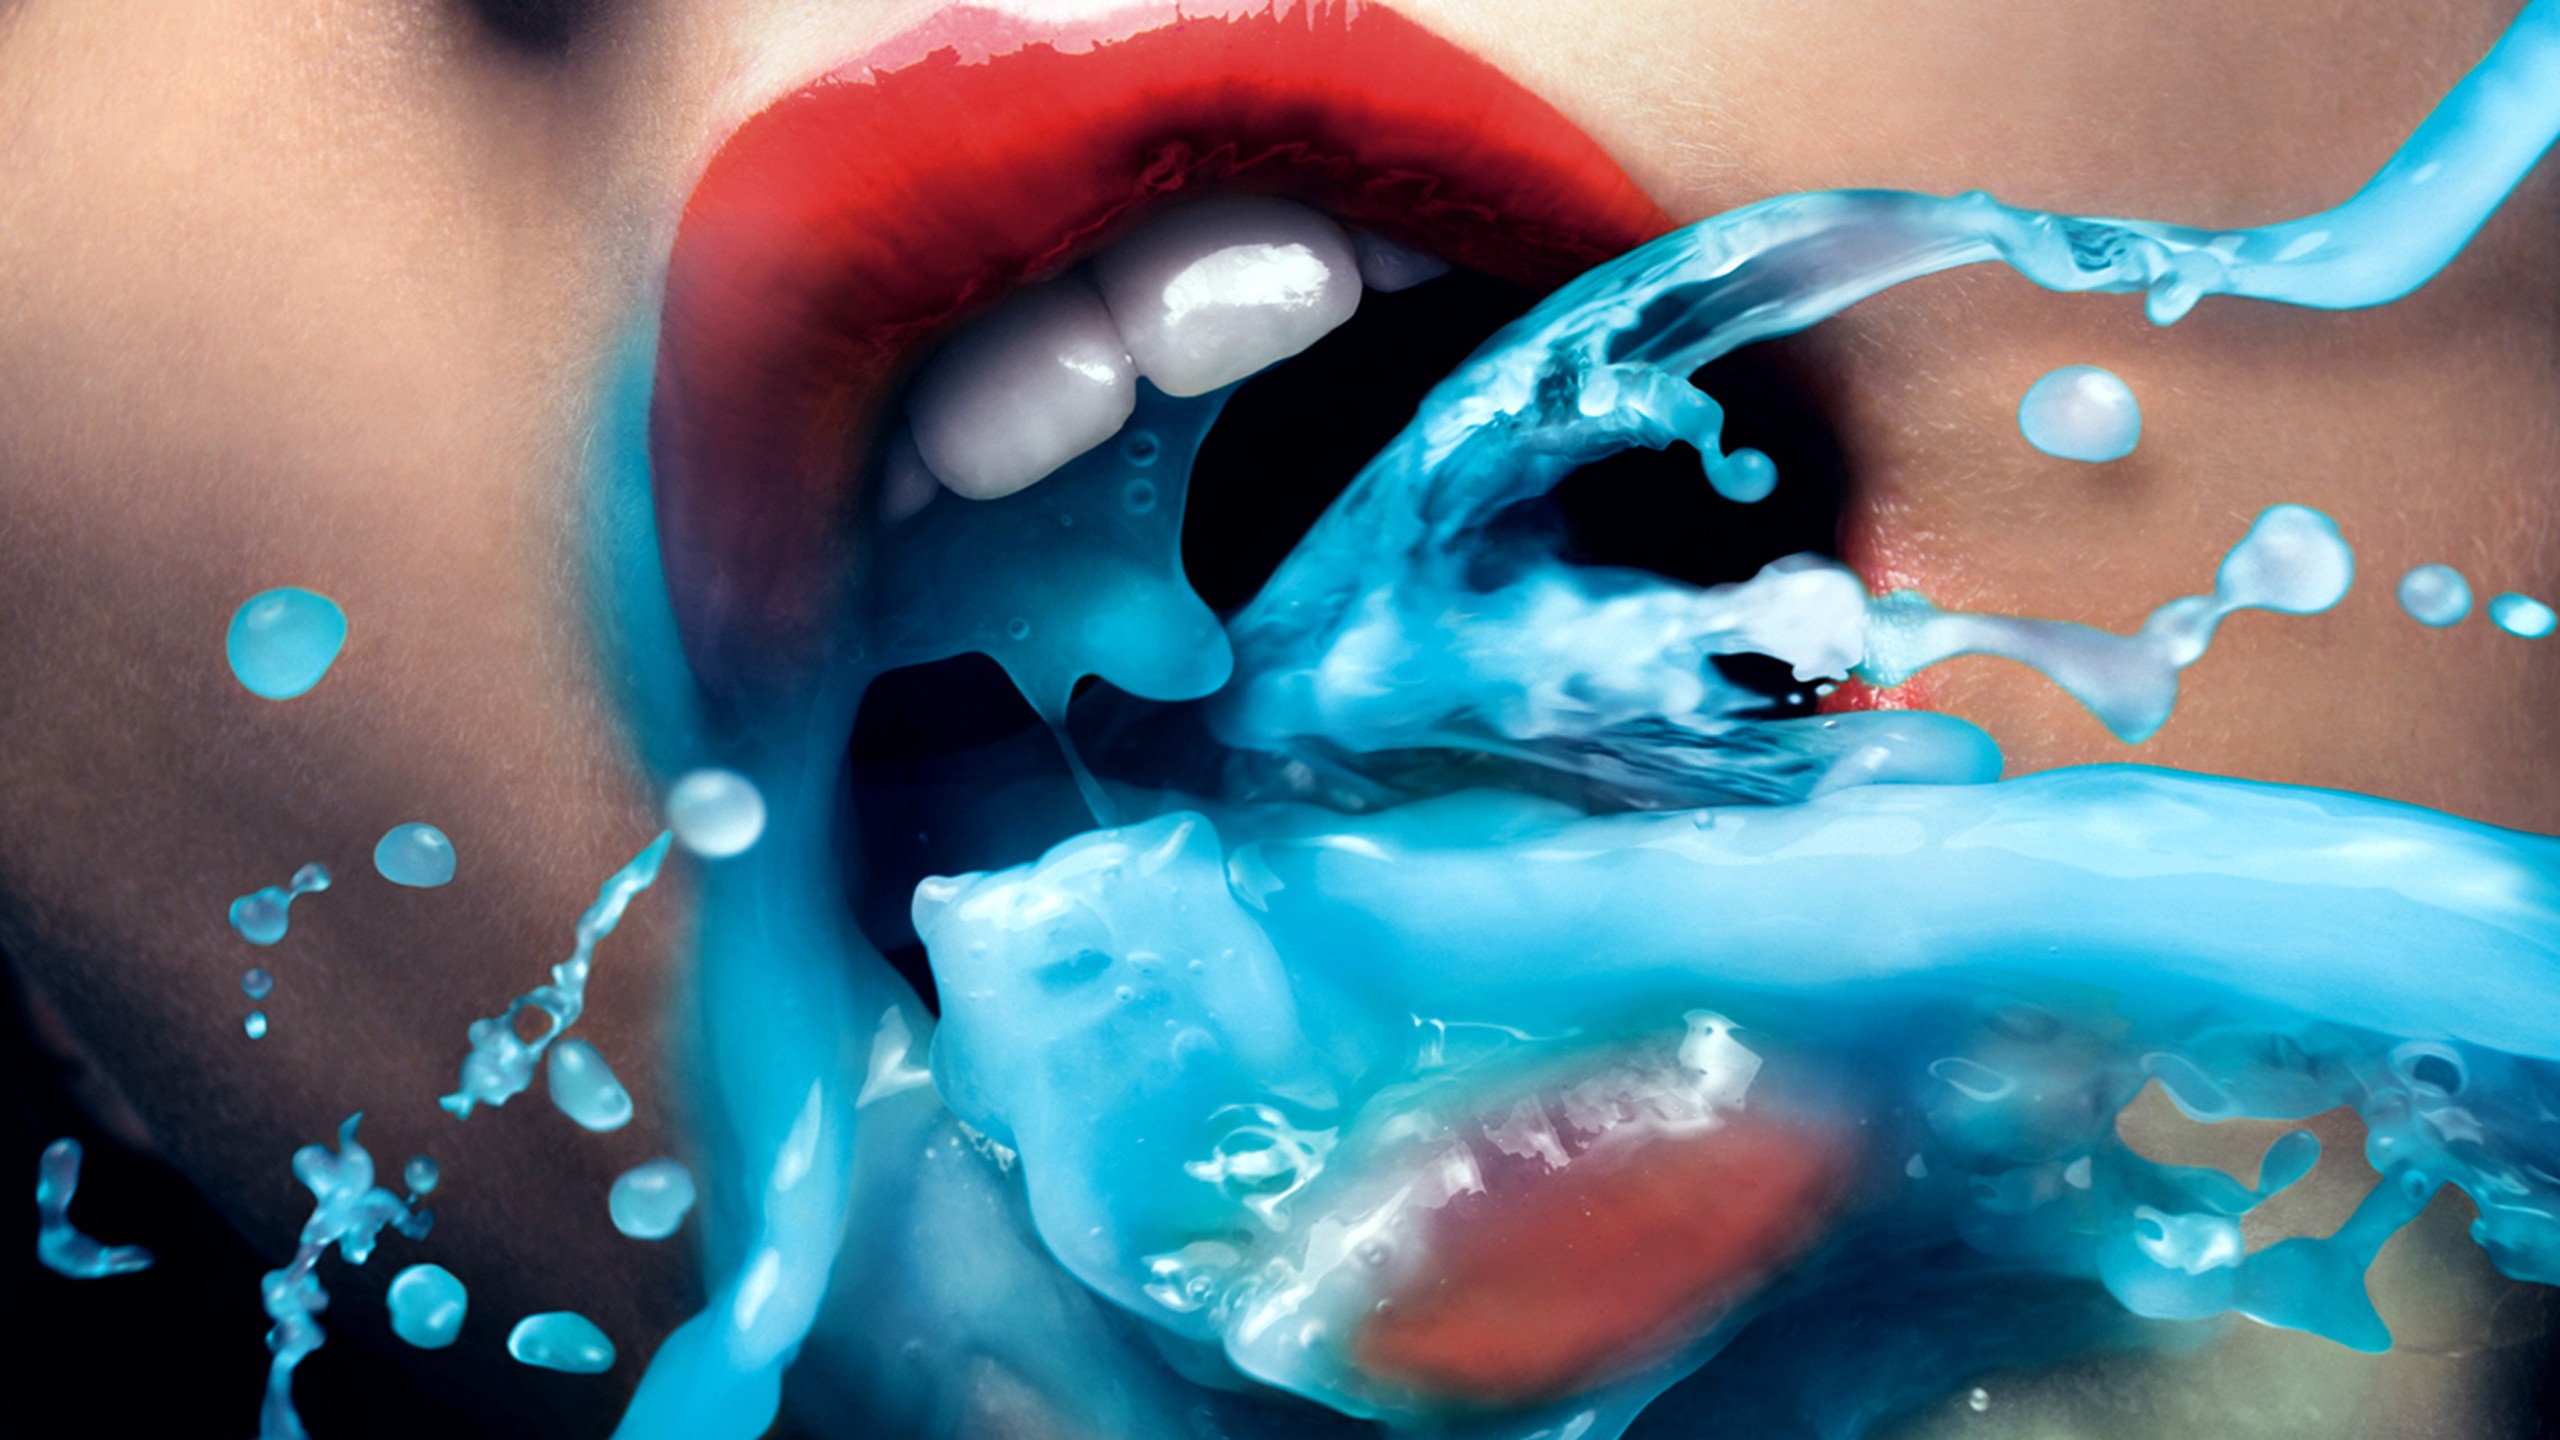 General 2560x1440 digital art mouth liquid artwork women blue cyan red lipstick teeth